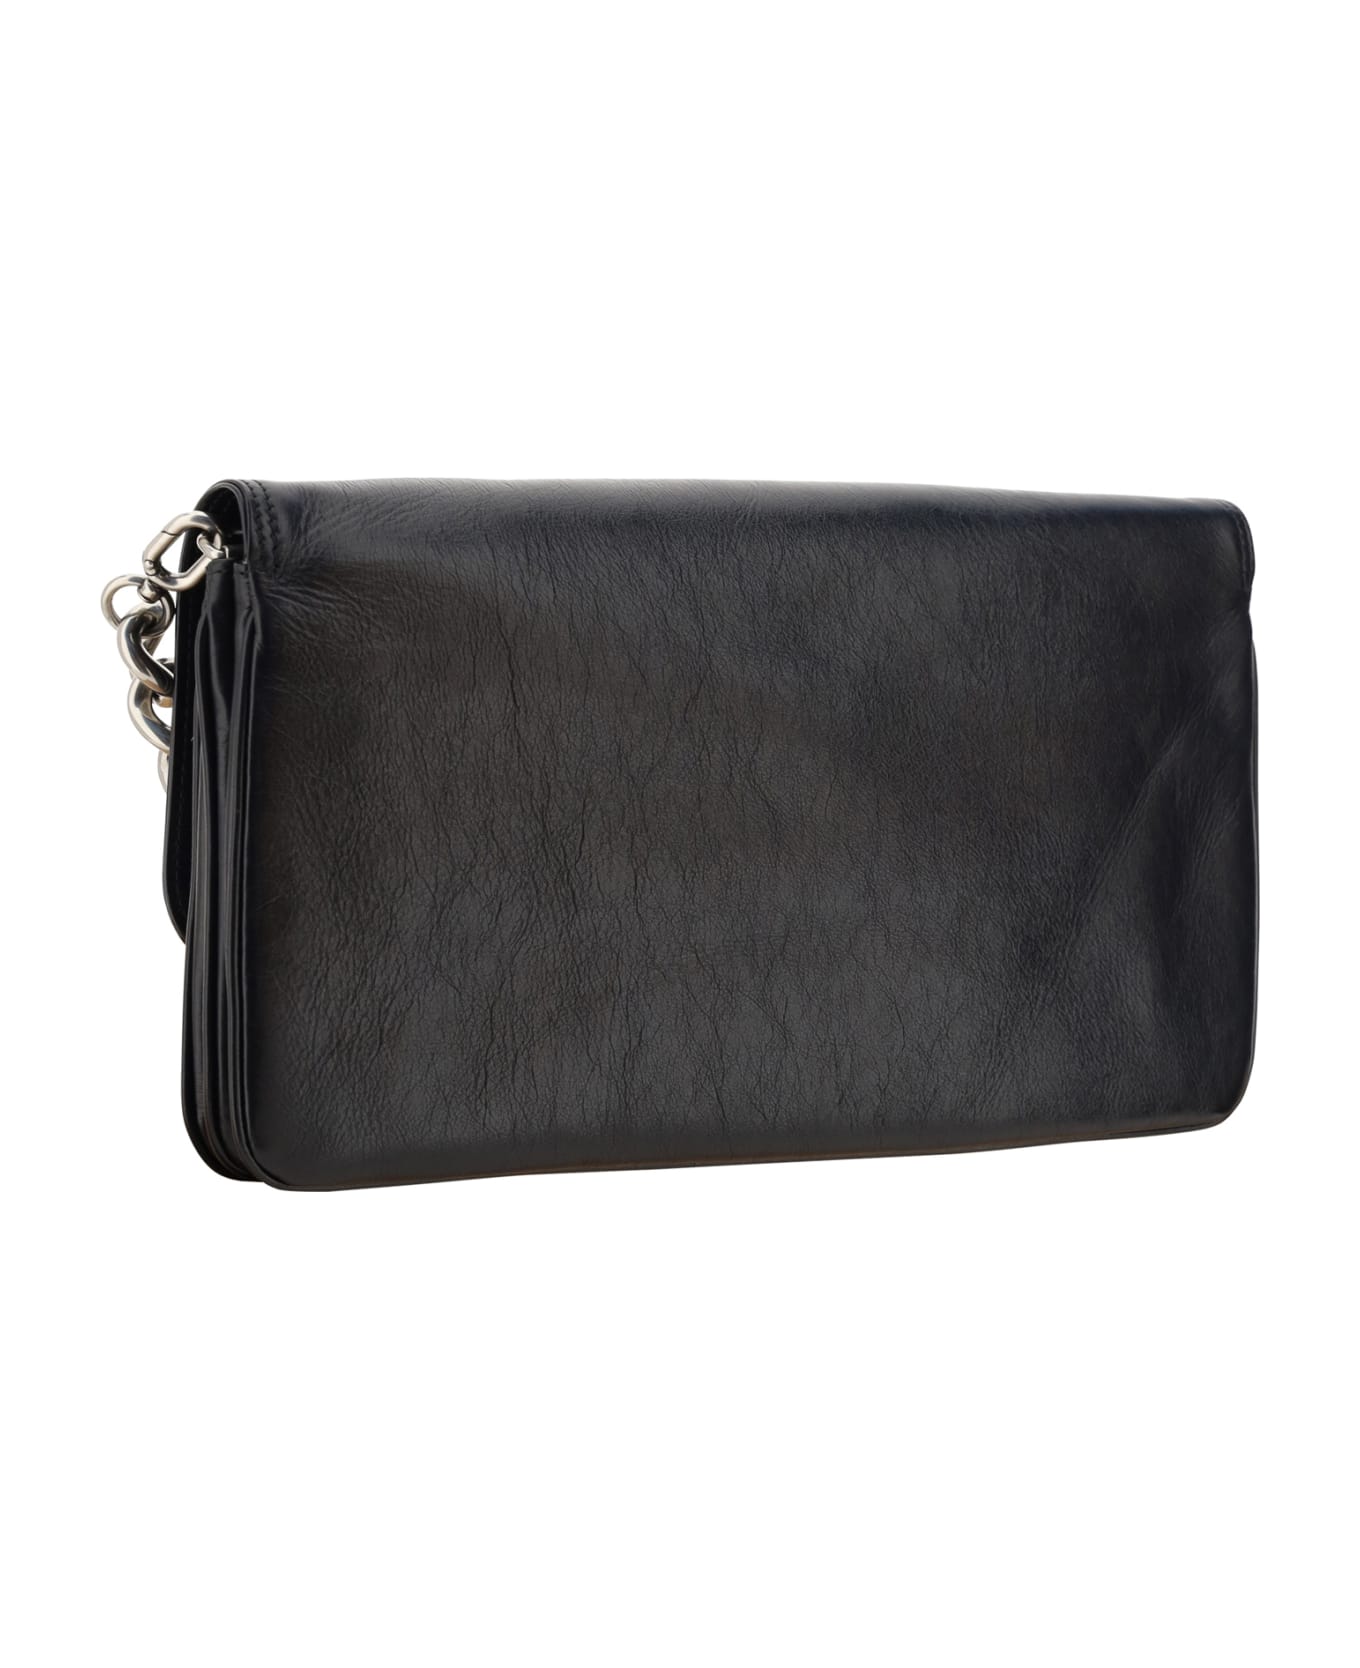 Balenciaga Shoulder Bag - BLACK